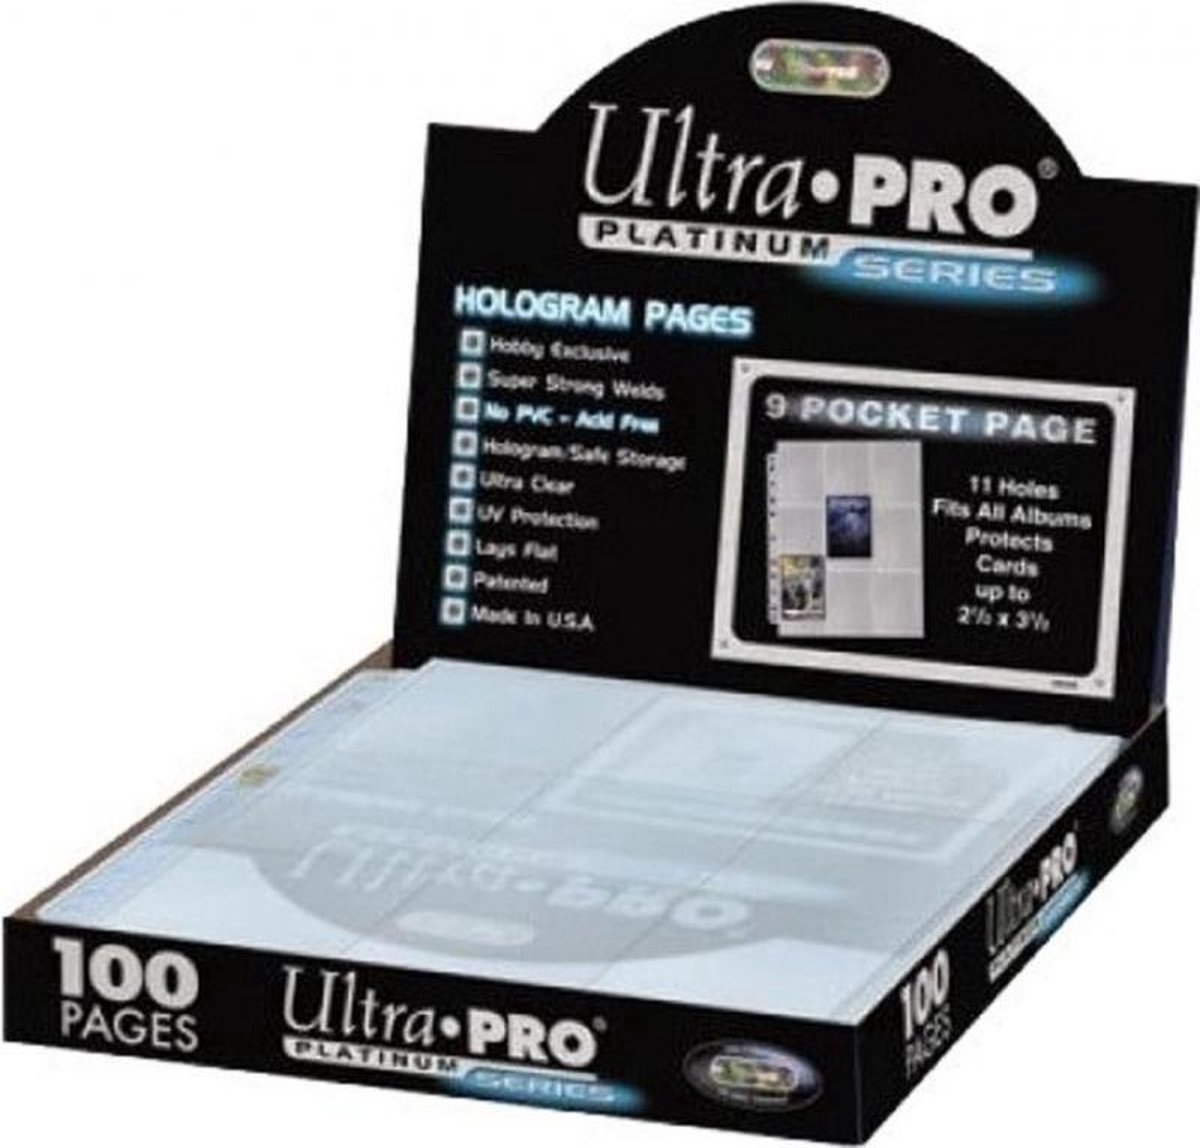 Ultra Pro Platinum Series Binder Pages 1 st